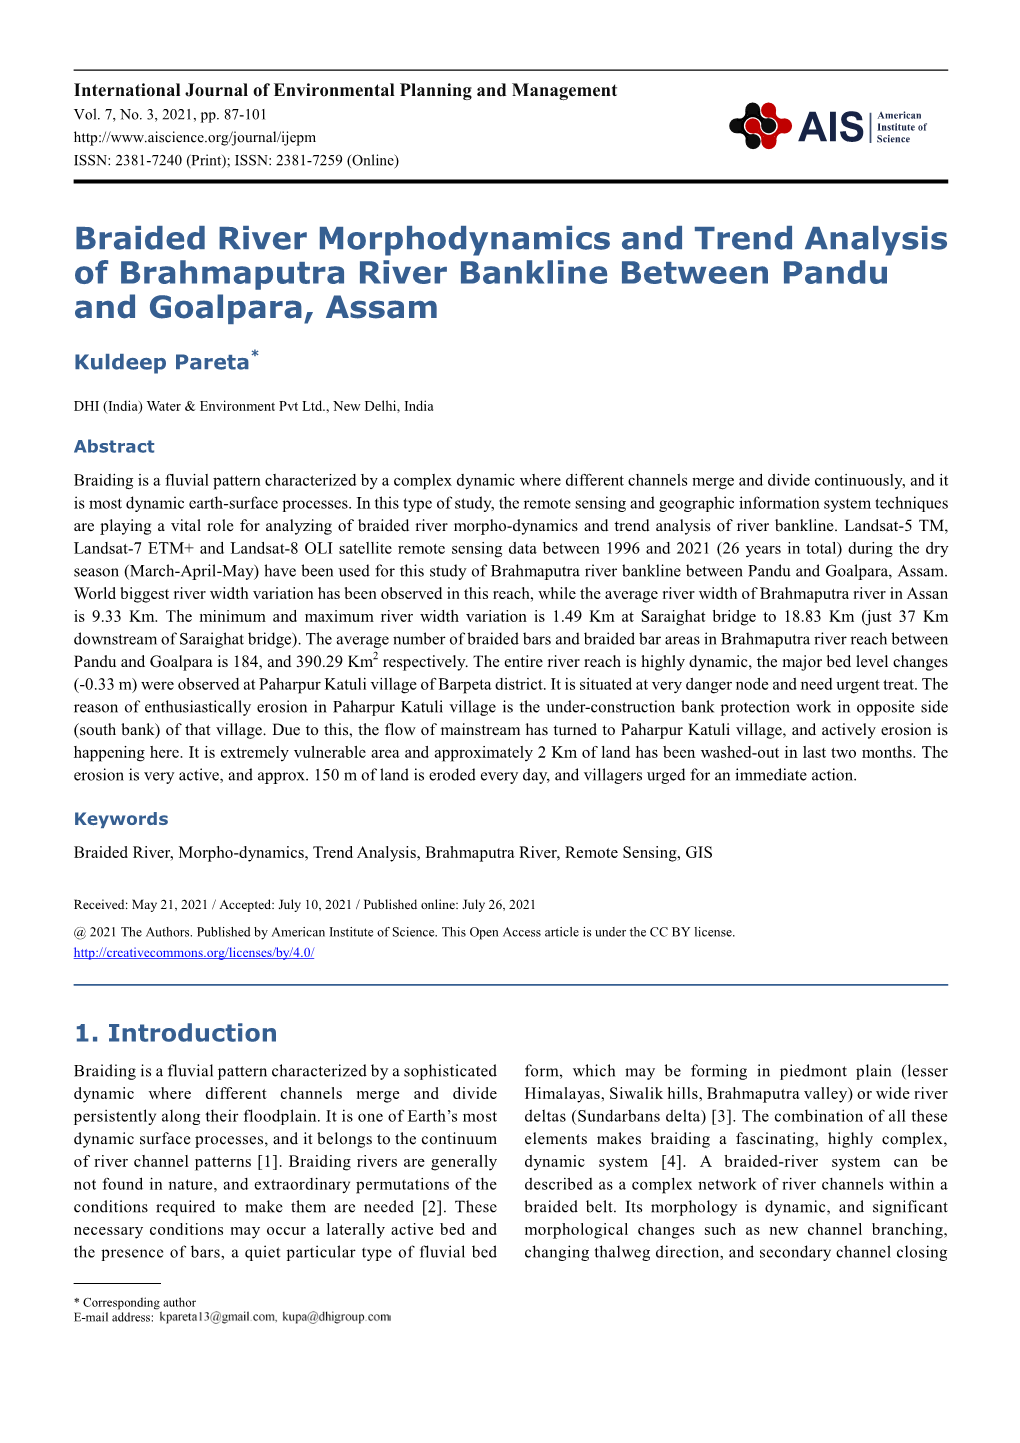 Braided River Morphodynamics and Trend Analysis of Brahmaputra River Bankline Between Pandu and Goalpara, Assam